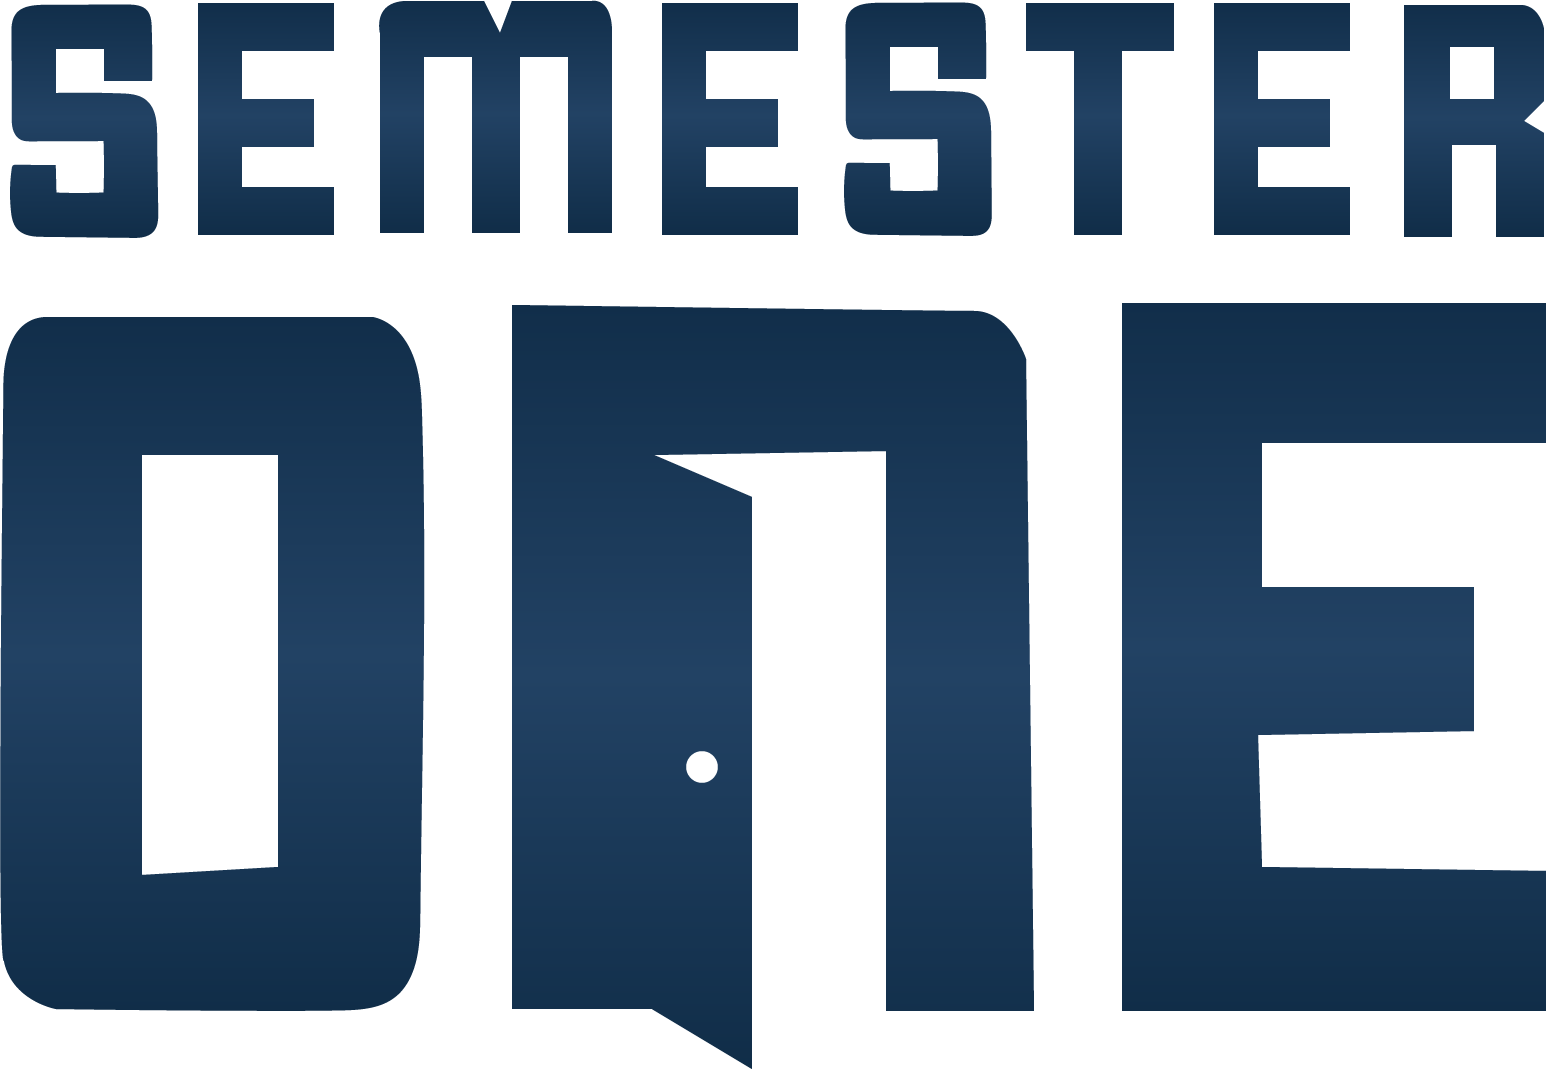 semesterOne Logo